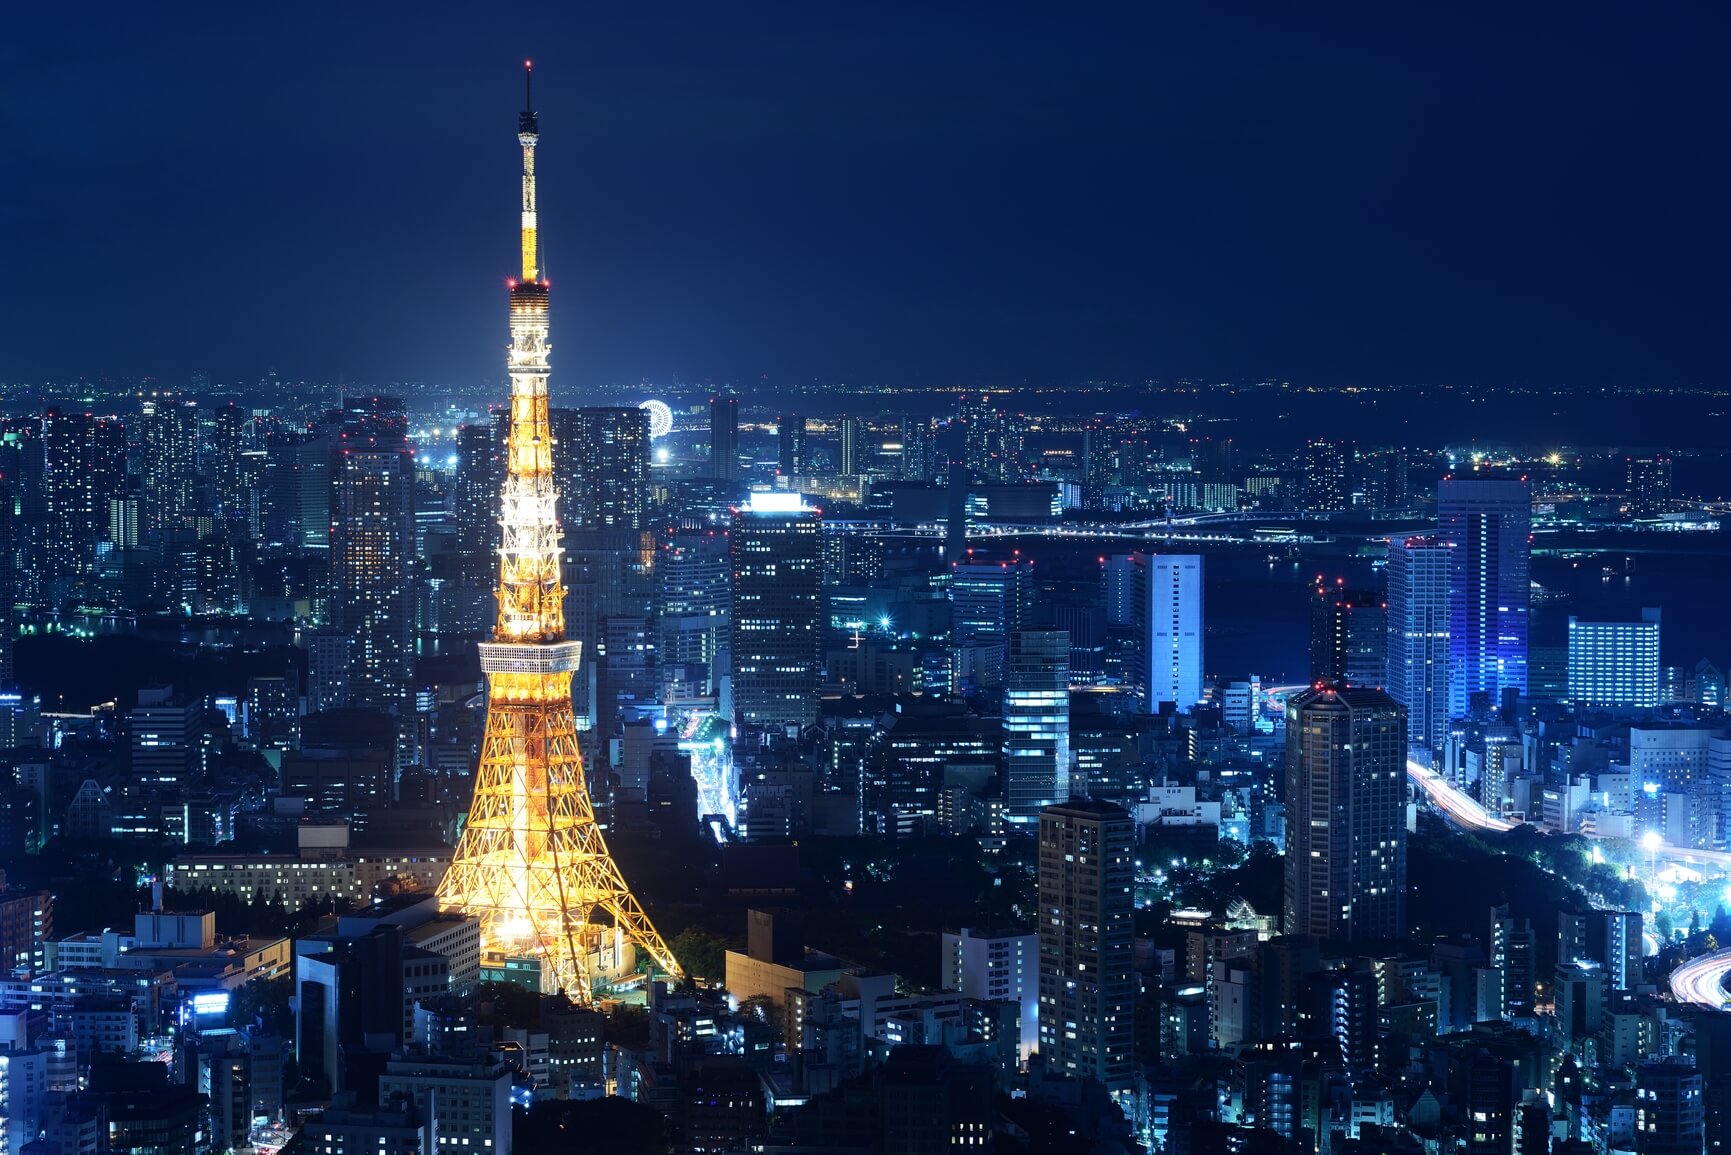 Flight deals from US cities to Tokyo, Japan | Secret Flying